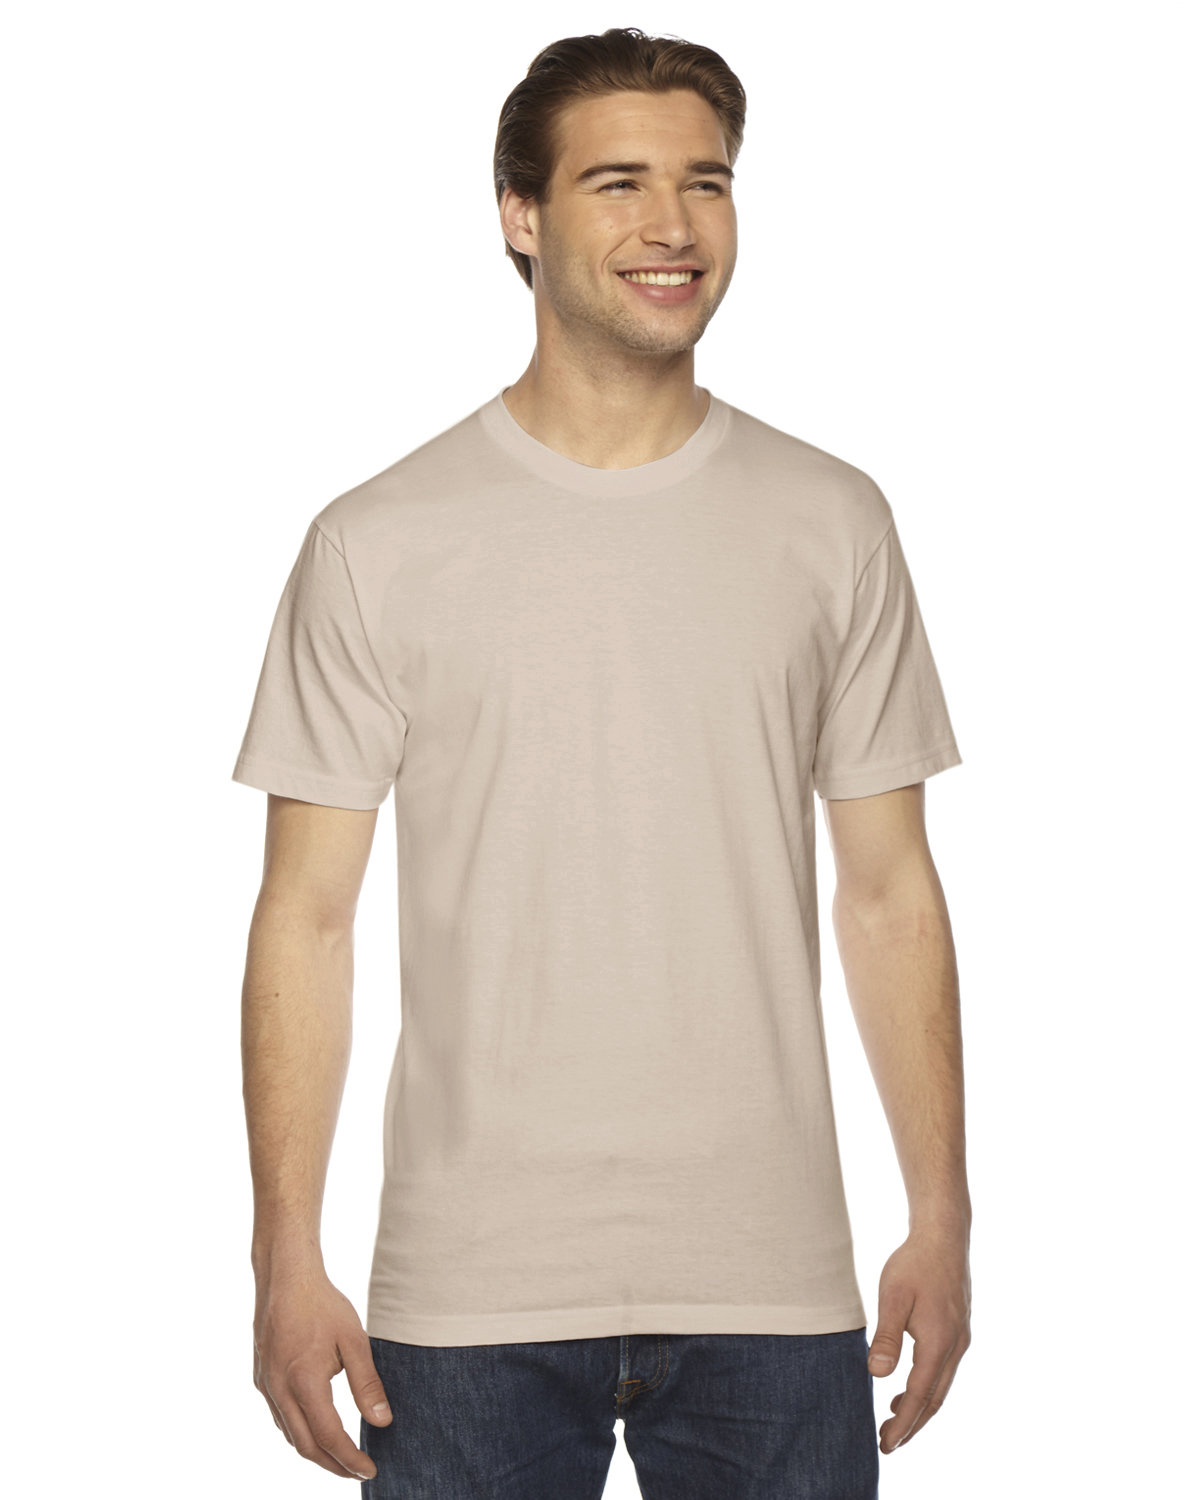 American Apparel Unisex Fine Jersey Short-Sleeve T-Shirt CREME 